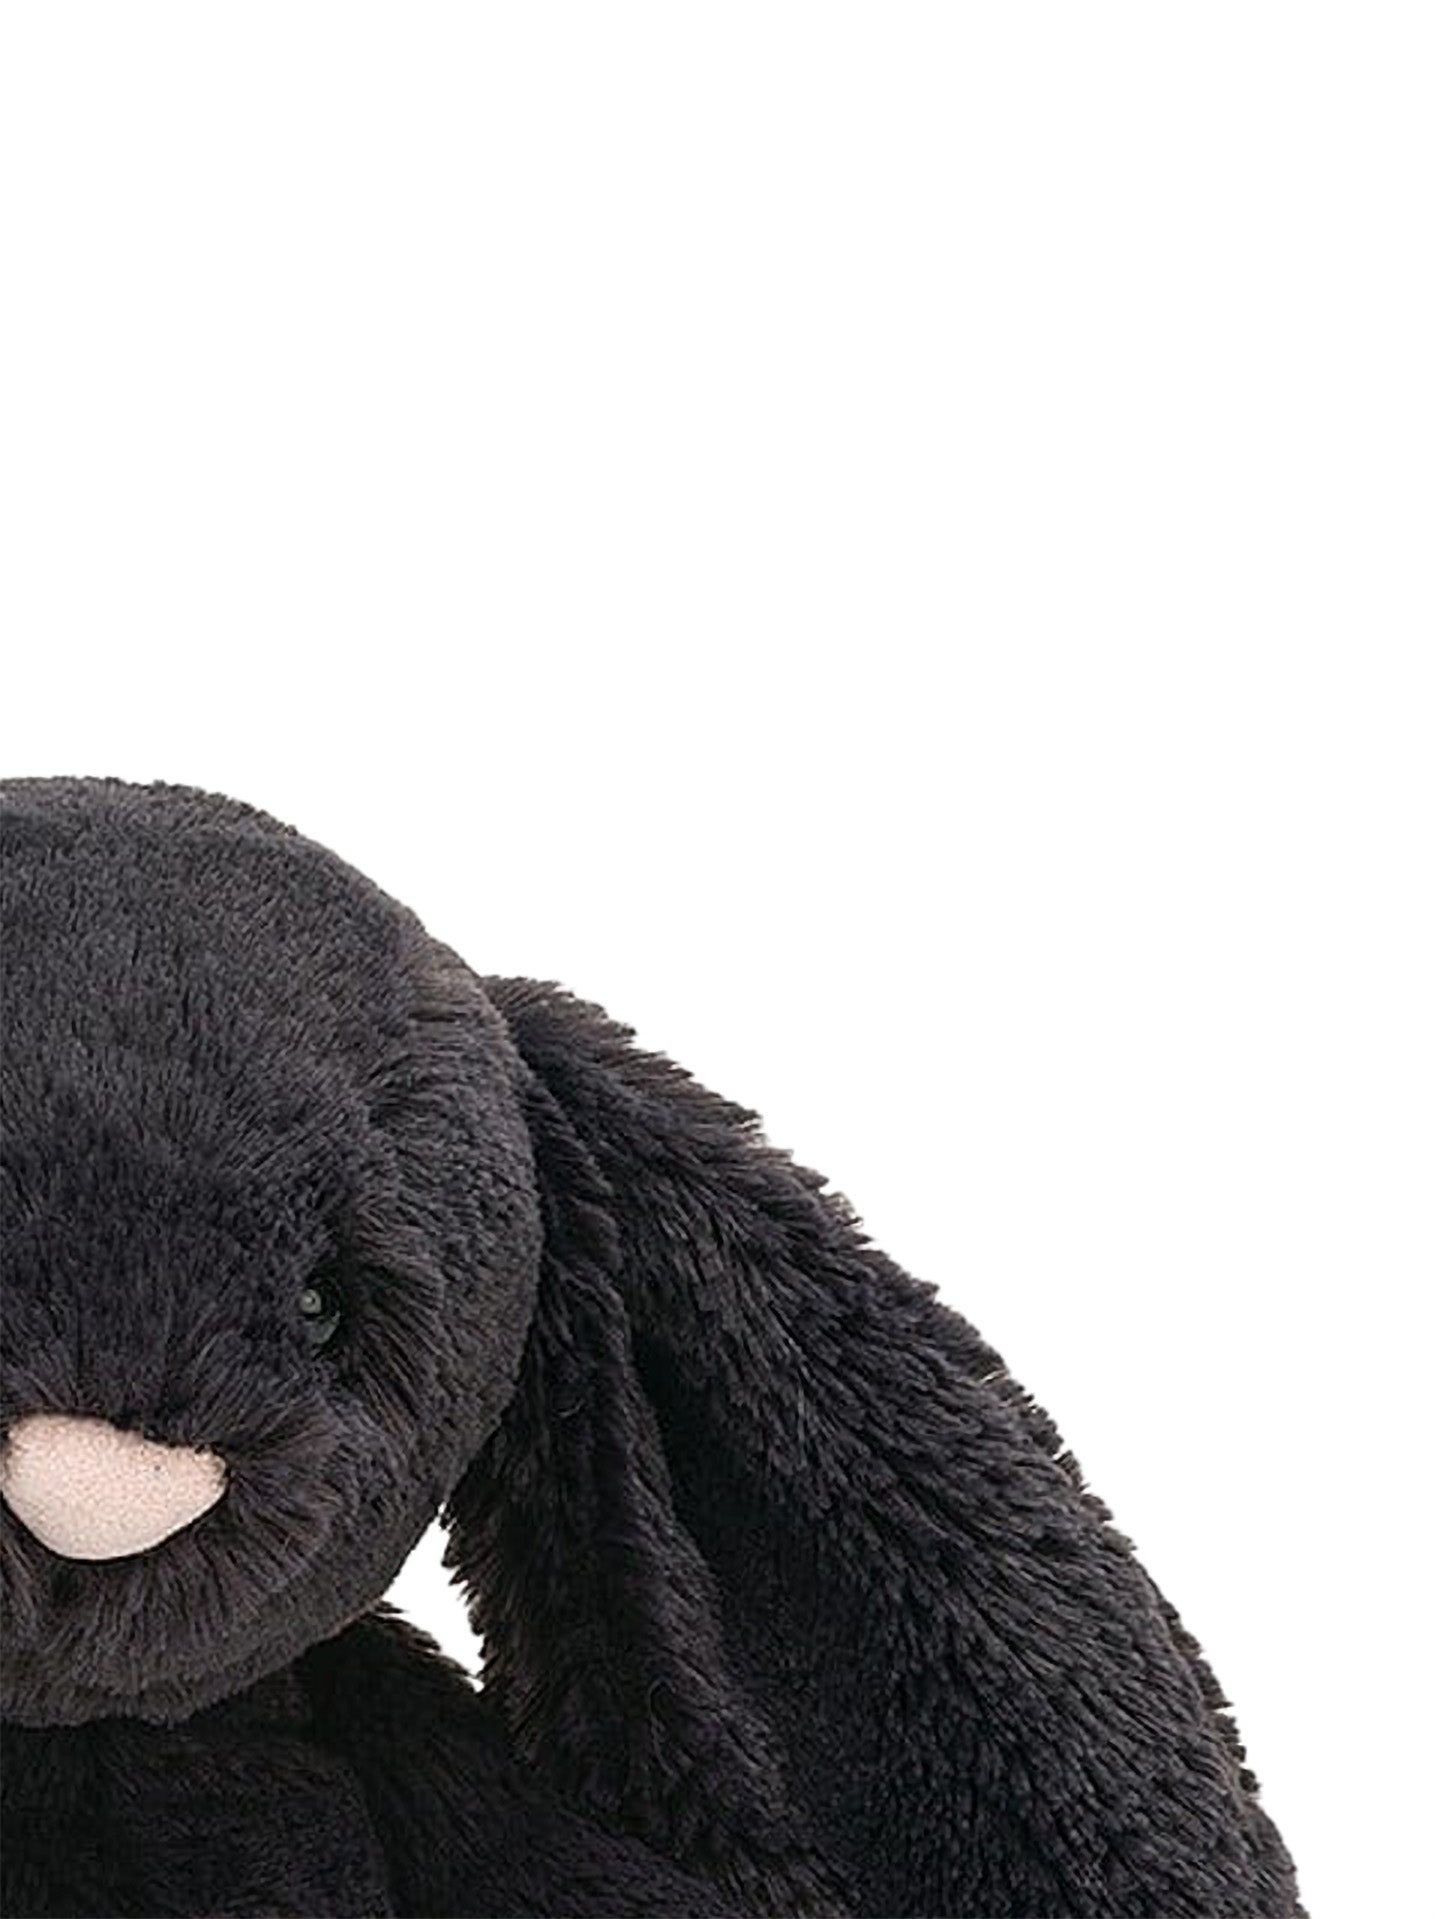 Bashful Black Inky Bunny, medium